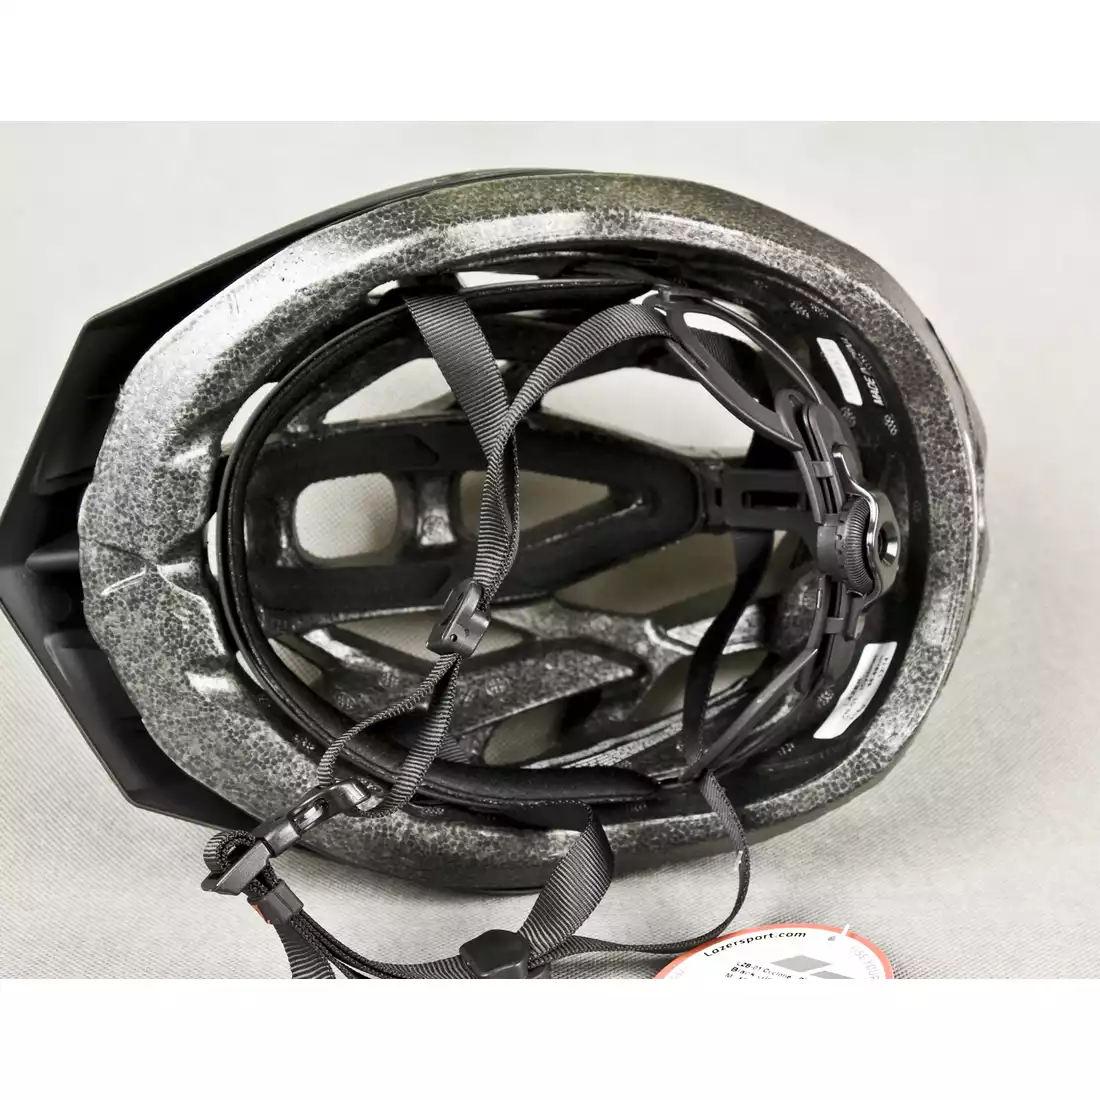 LAZER - CYCLONE kask rowerowy MTB, kolor: black glossy